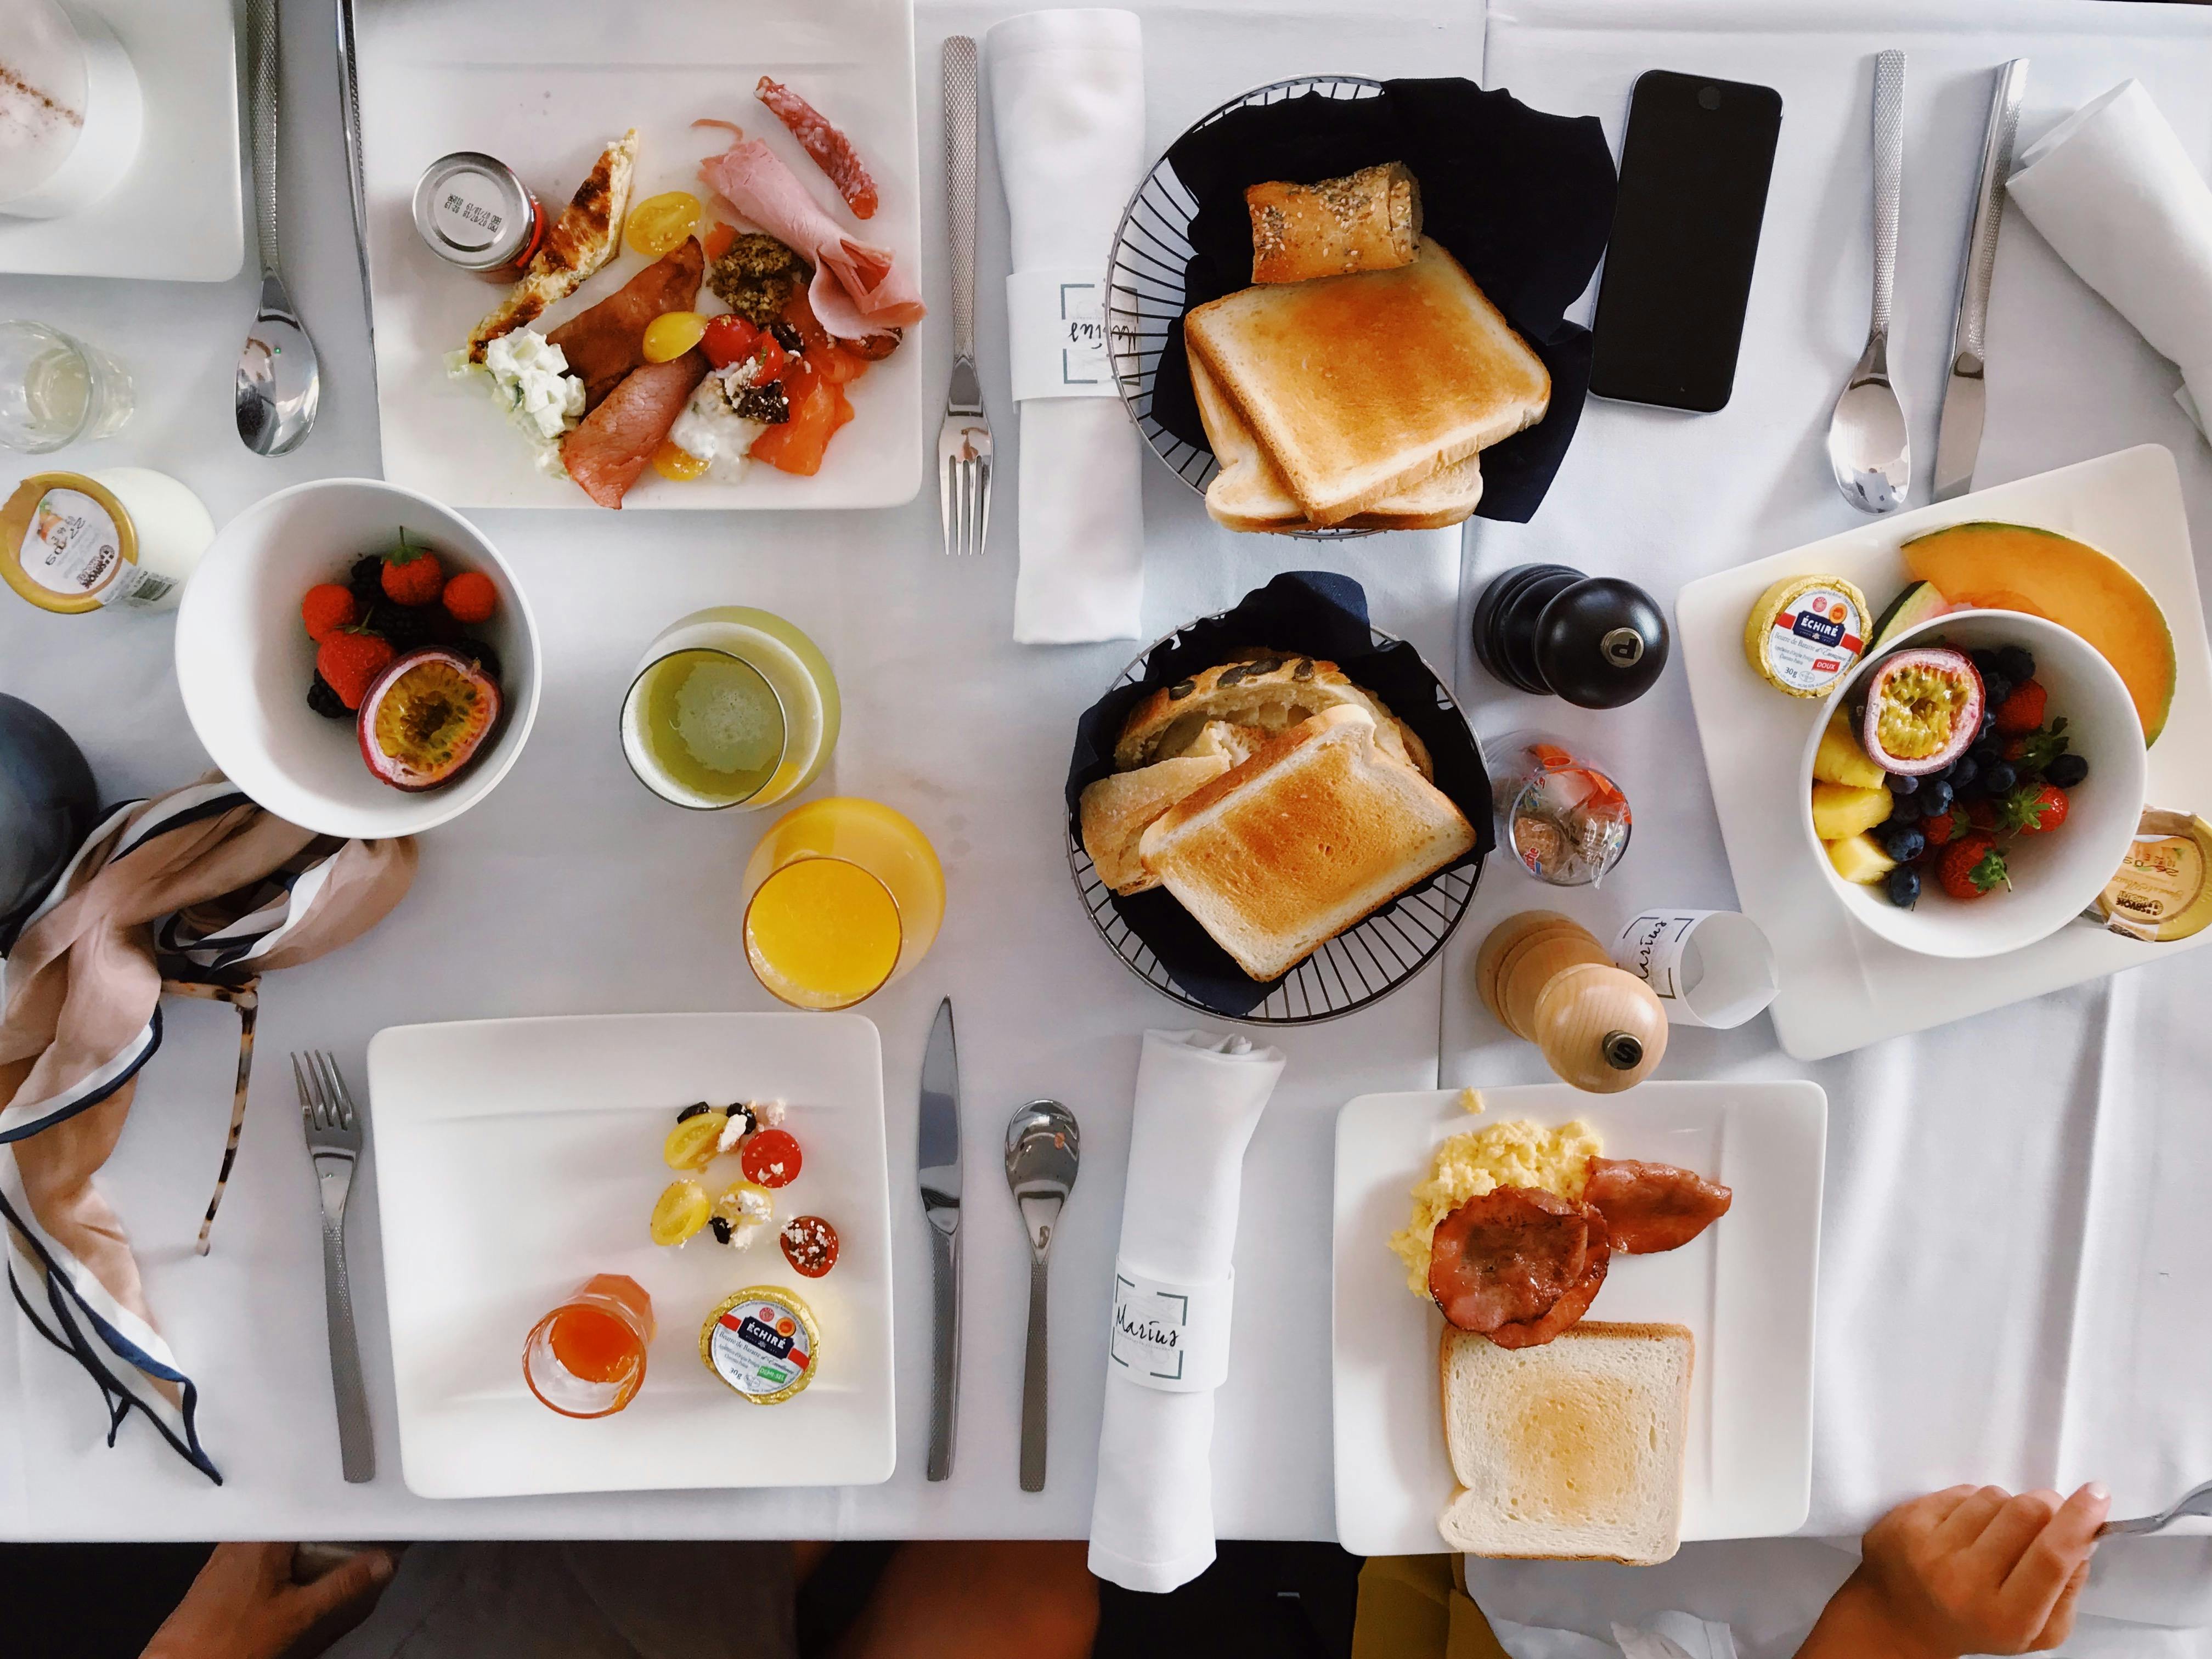 A breakfast table | Source: Pexels